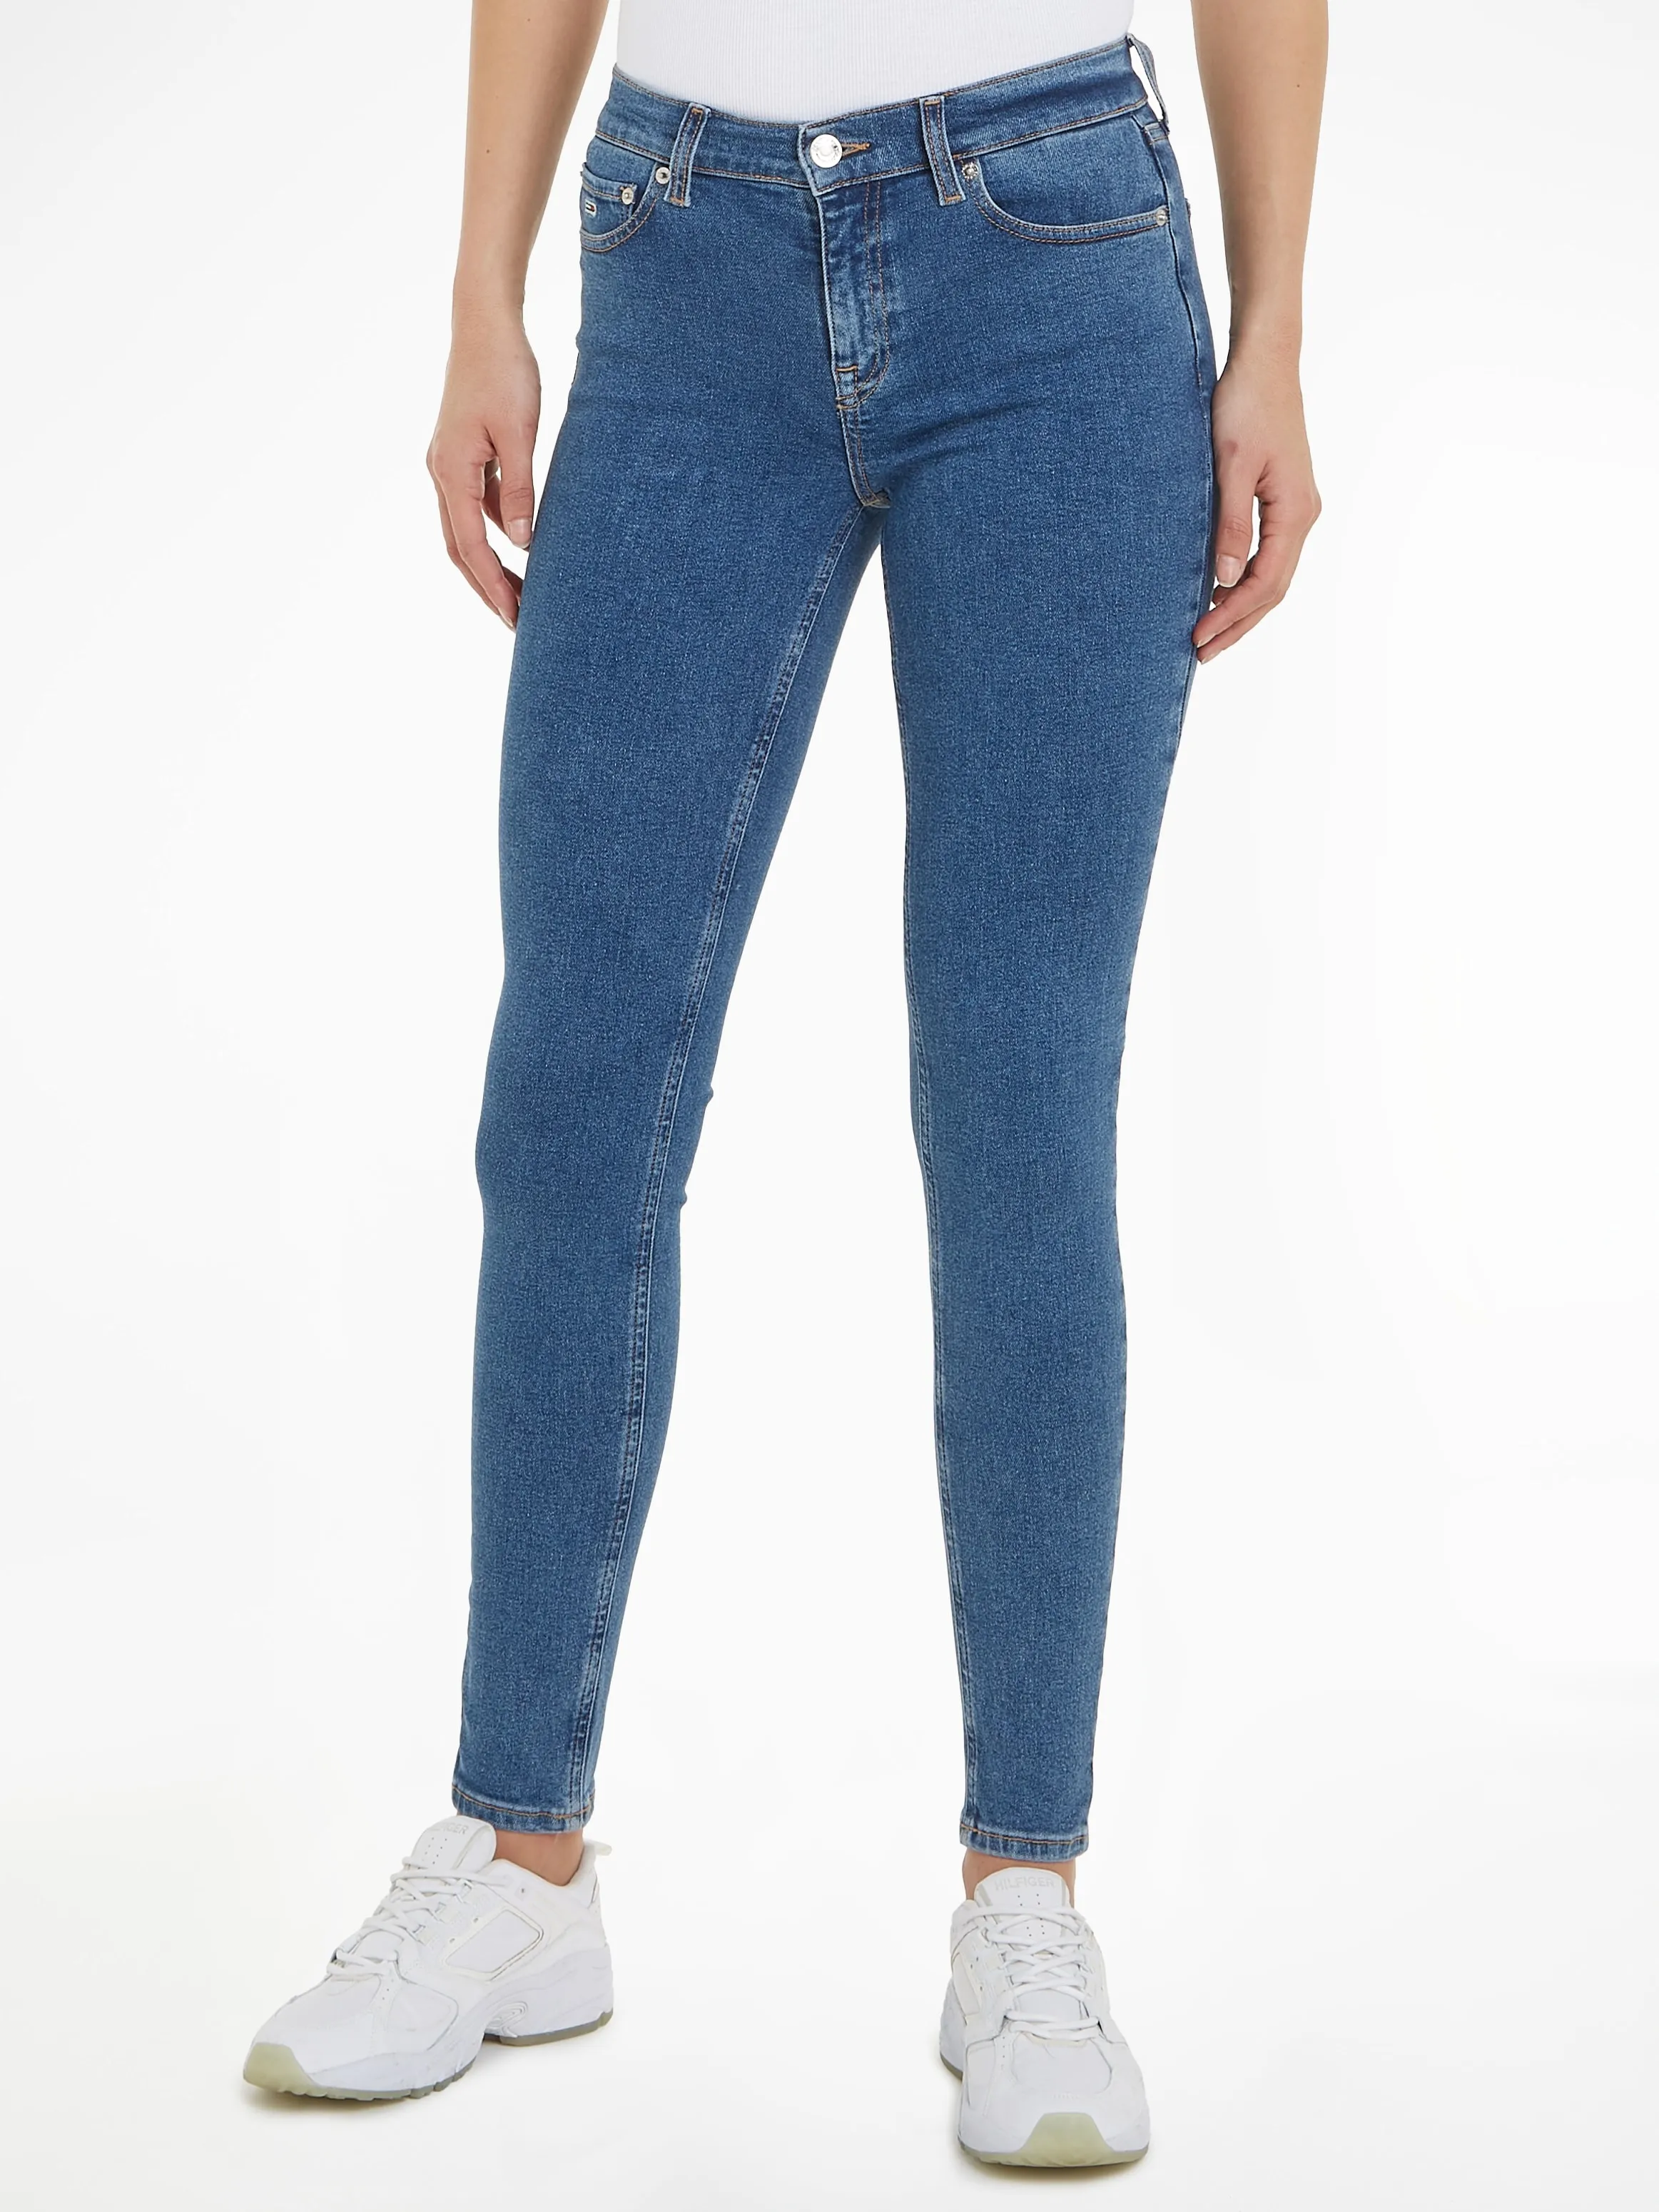 Bequeme Jeans TOMMY JEANS "Nora" Gr. 34, Länge 32, blau (mid blue32) Damen Jeans mit Ledermarkenlabel